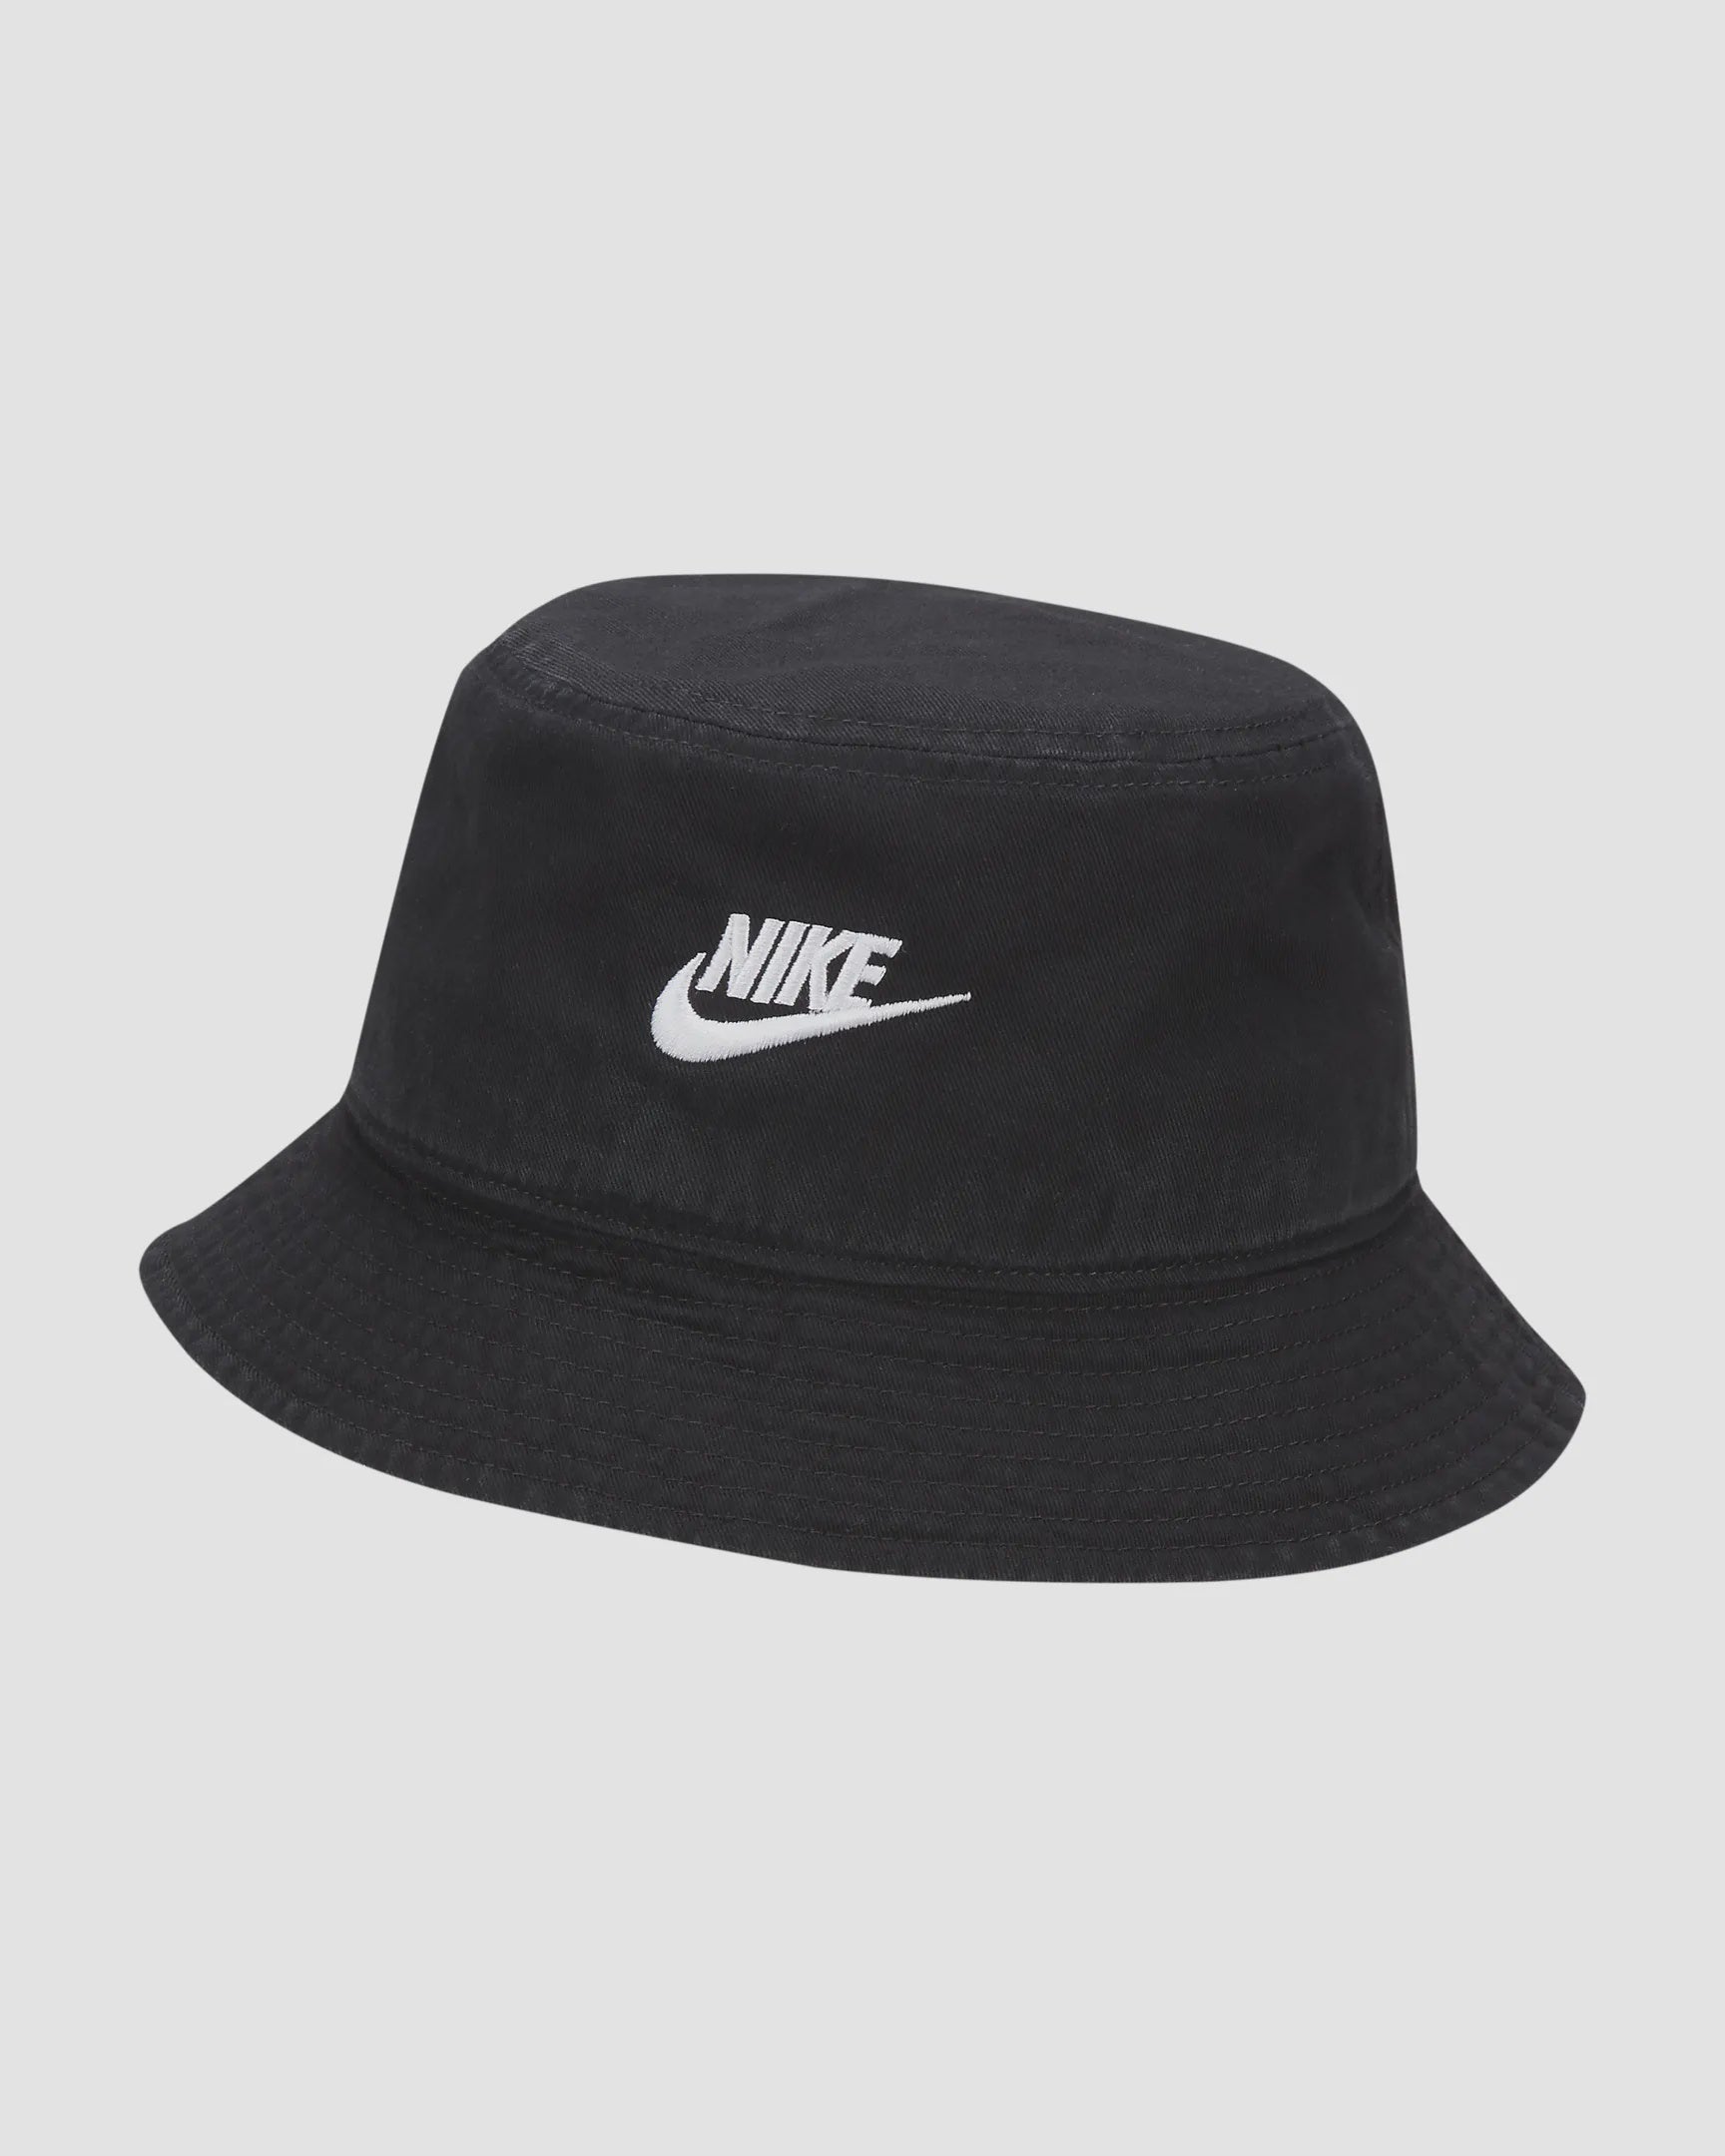 NA-V42 (Nike apex futura washed bucket hat black/white) 72392187